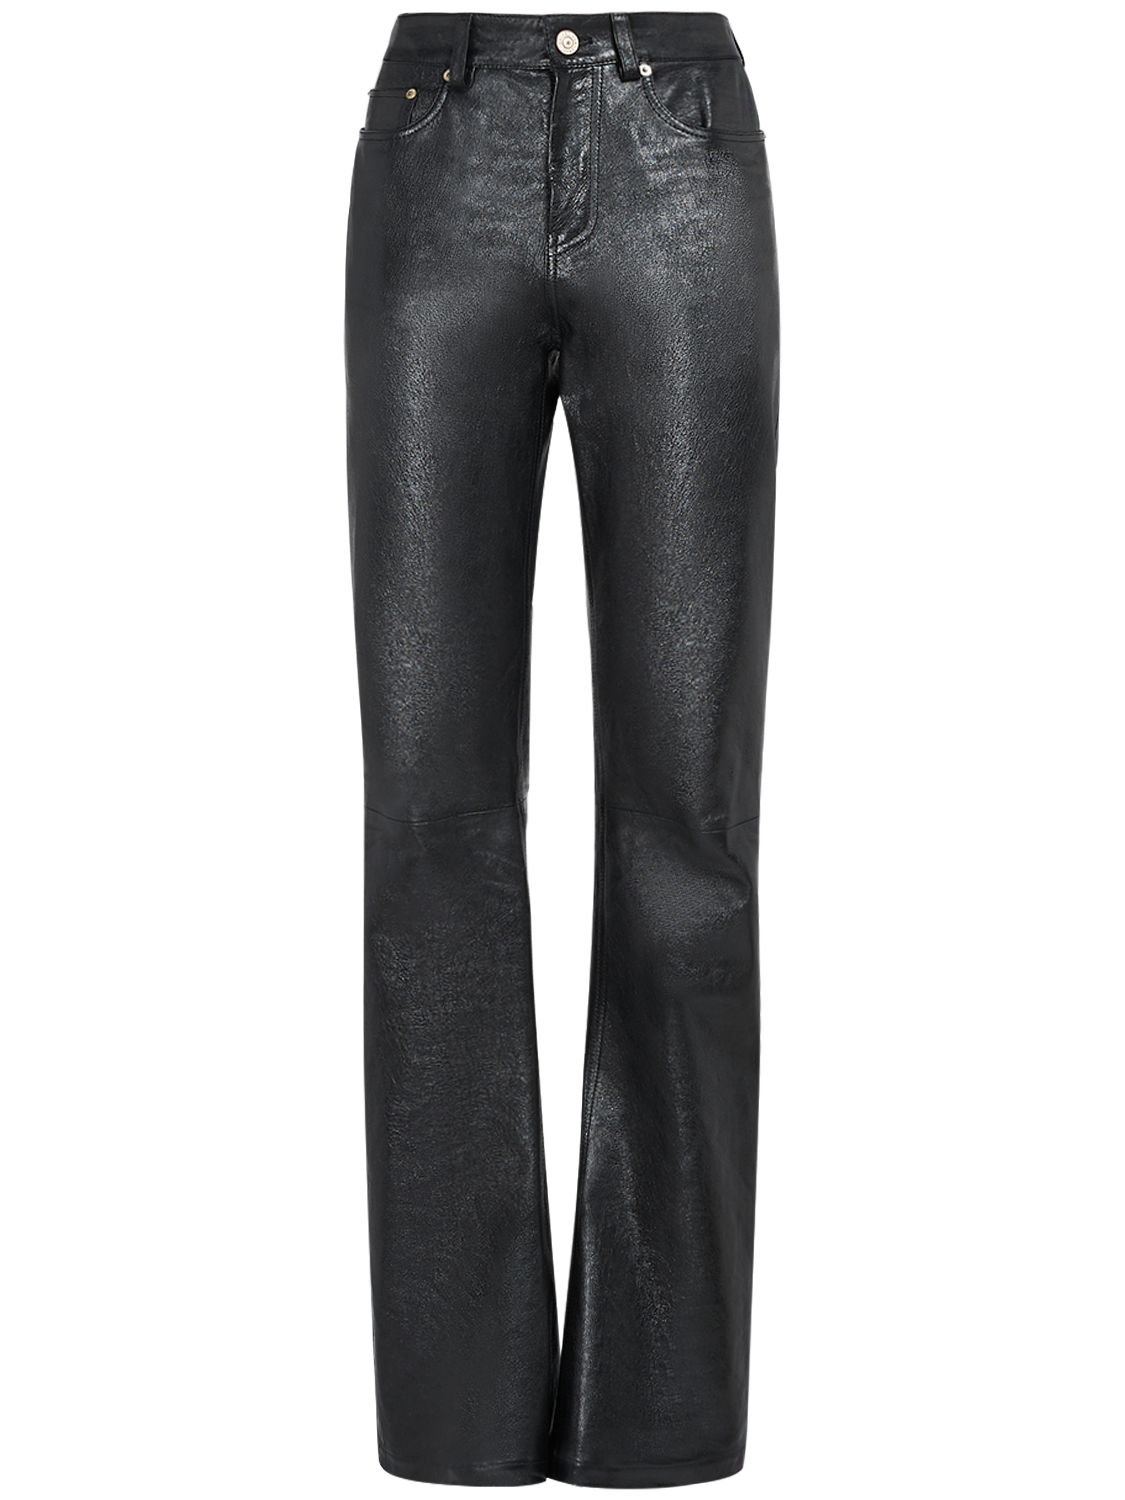 Semi Shiny Leather Bootcut Pants